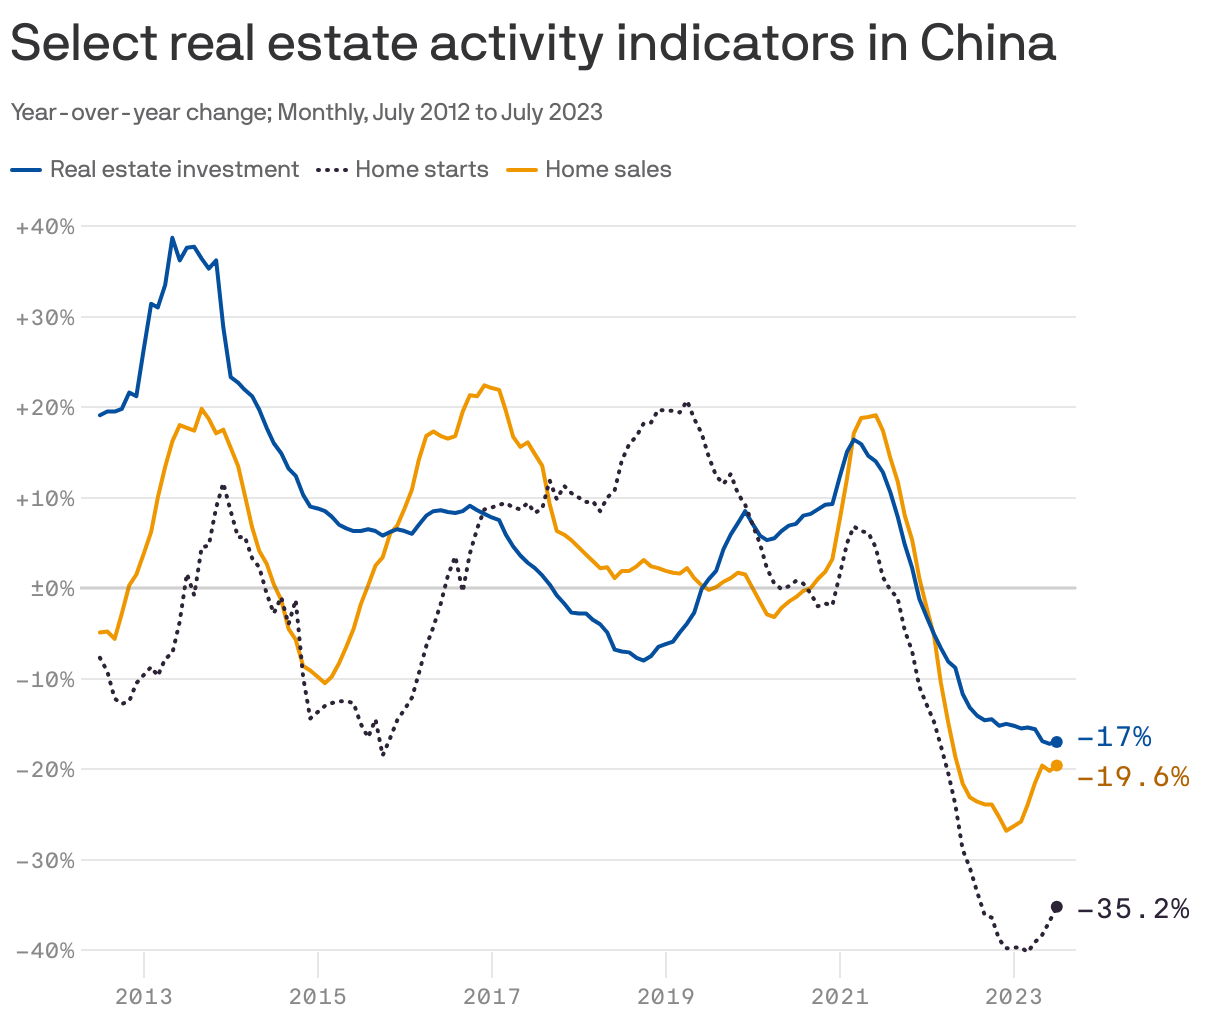 Select real estate activity indicators in China